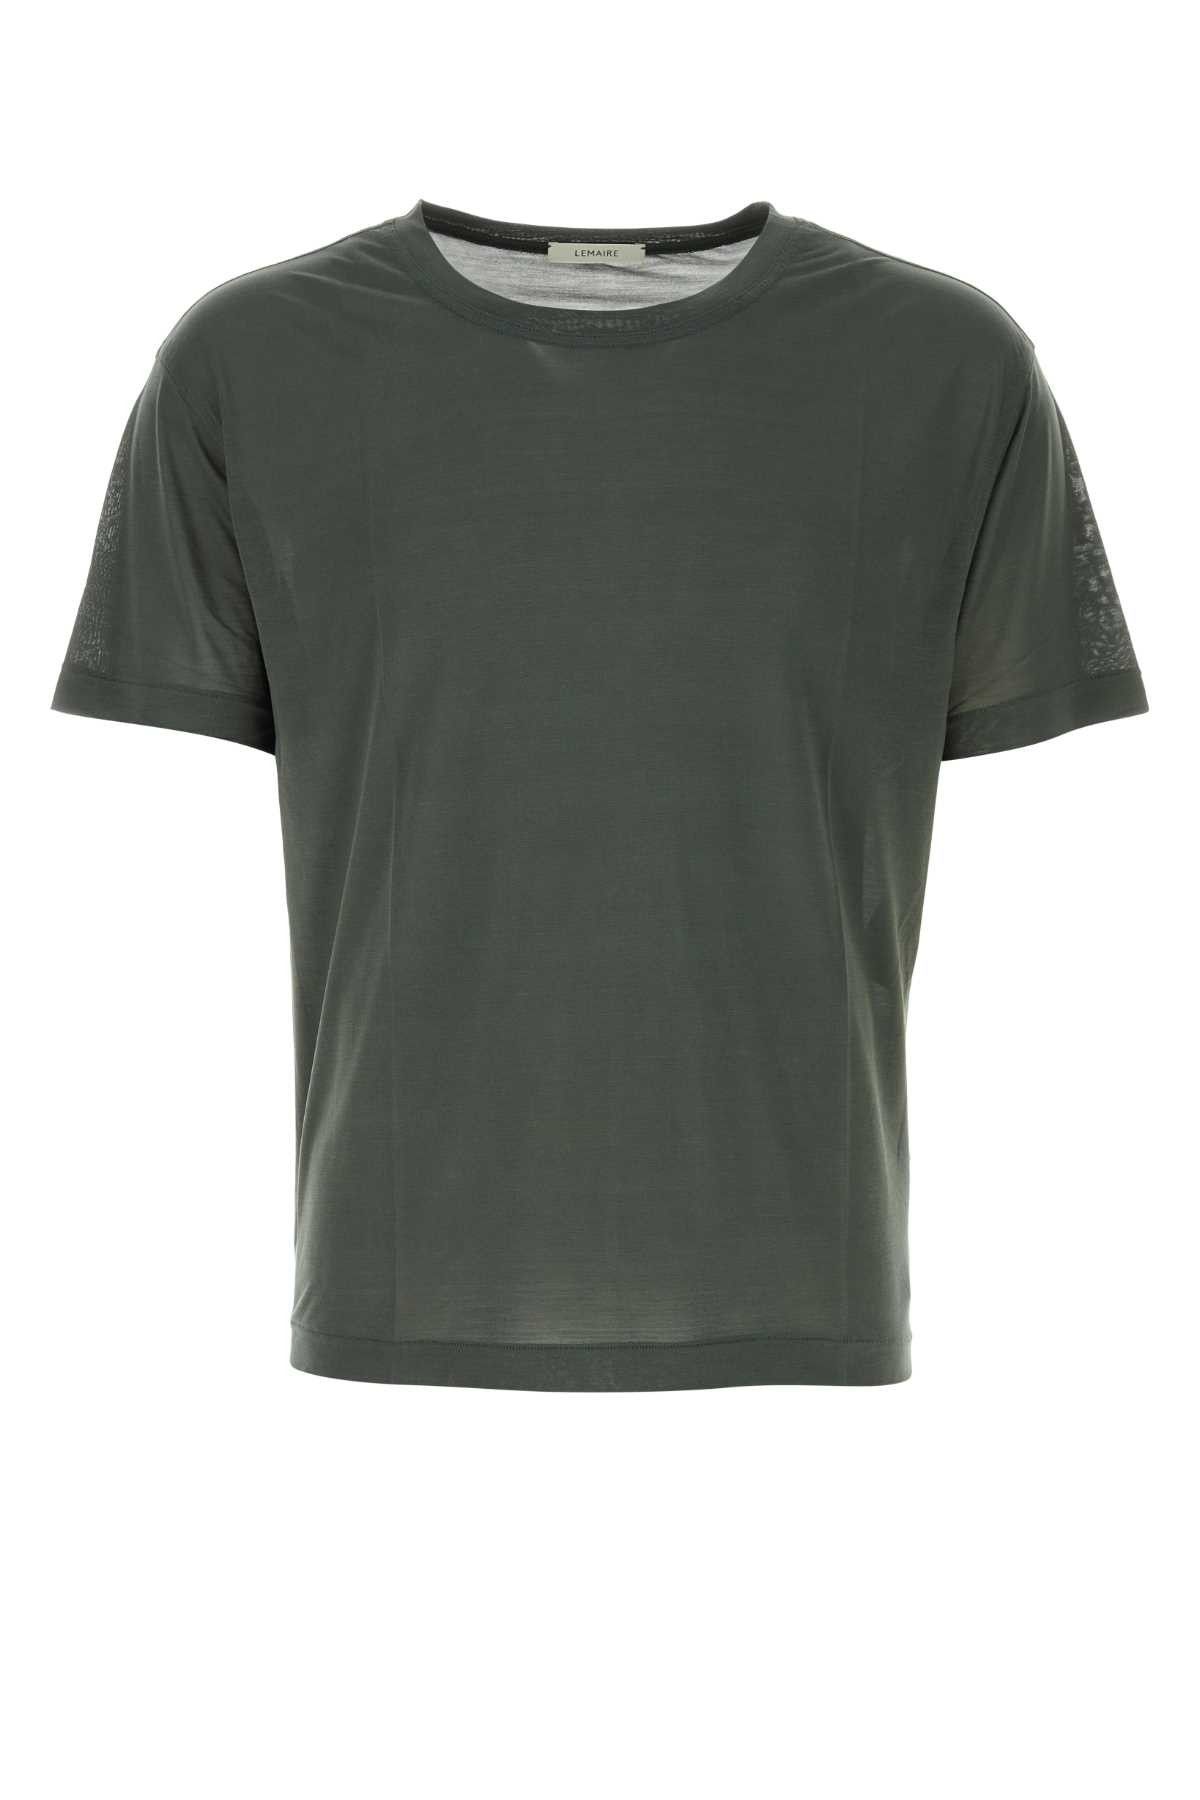 Lemaire Dark Green Silk T-Shirt | Grailed